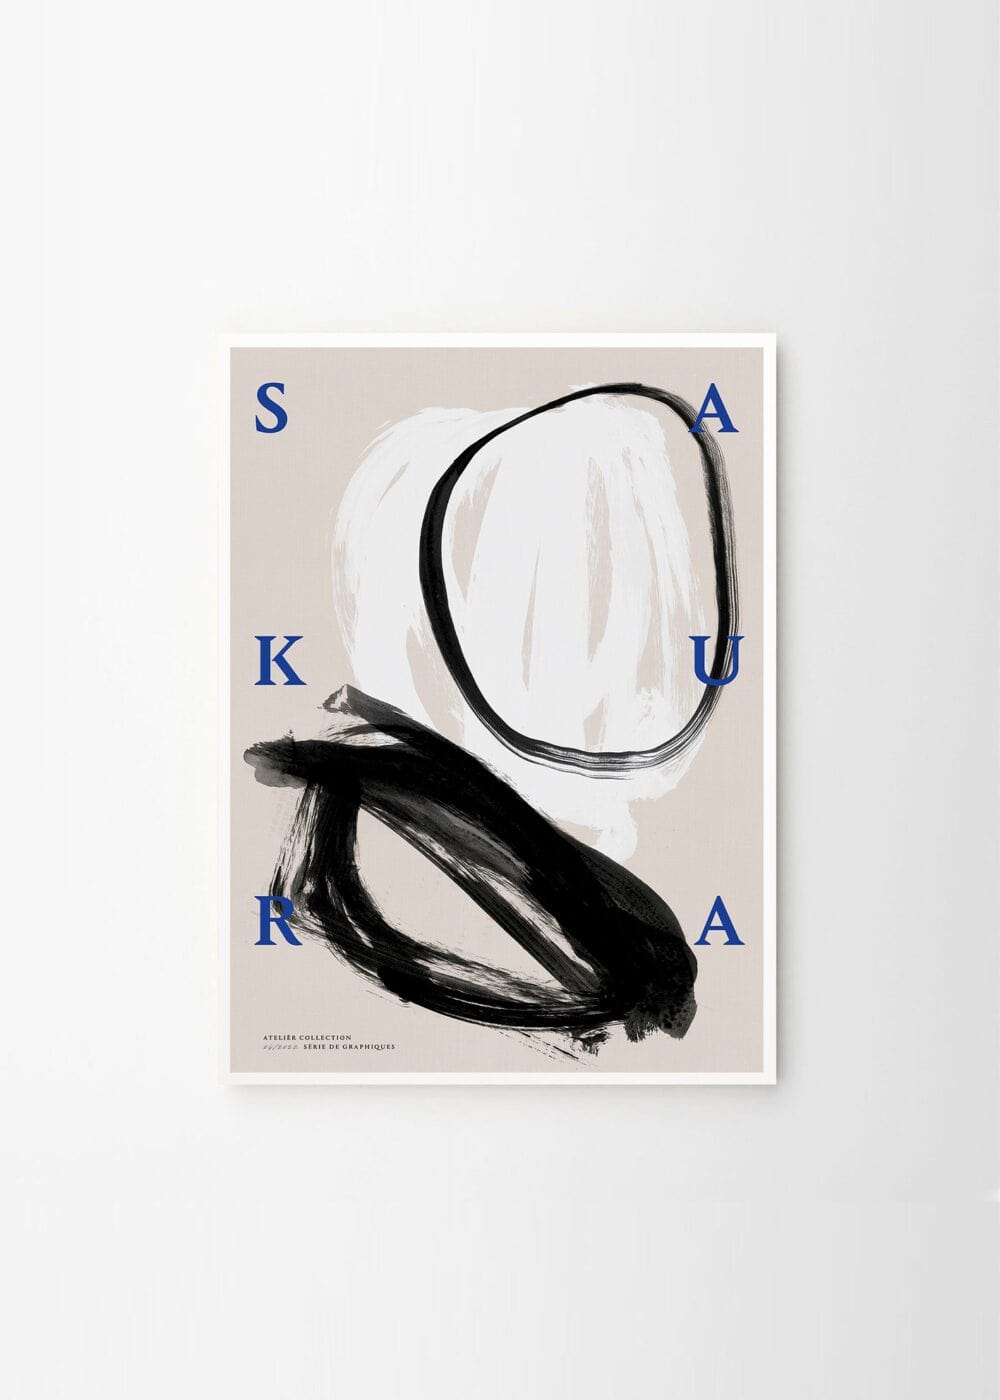 THE POSTER CLUB Poster Πόστερ, Sakura, Julia Hallström Hjort, (70x100)cm, Μπλέ/Μάυρο/Εκρού, Sustainable Paper, THE POSTER CLUB